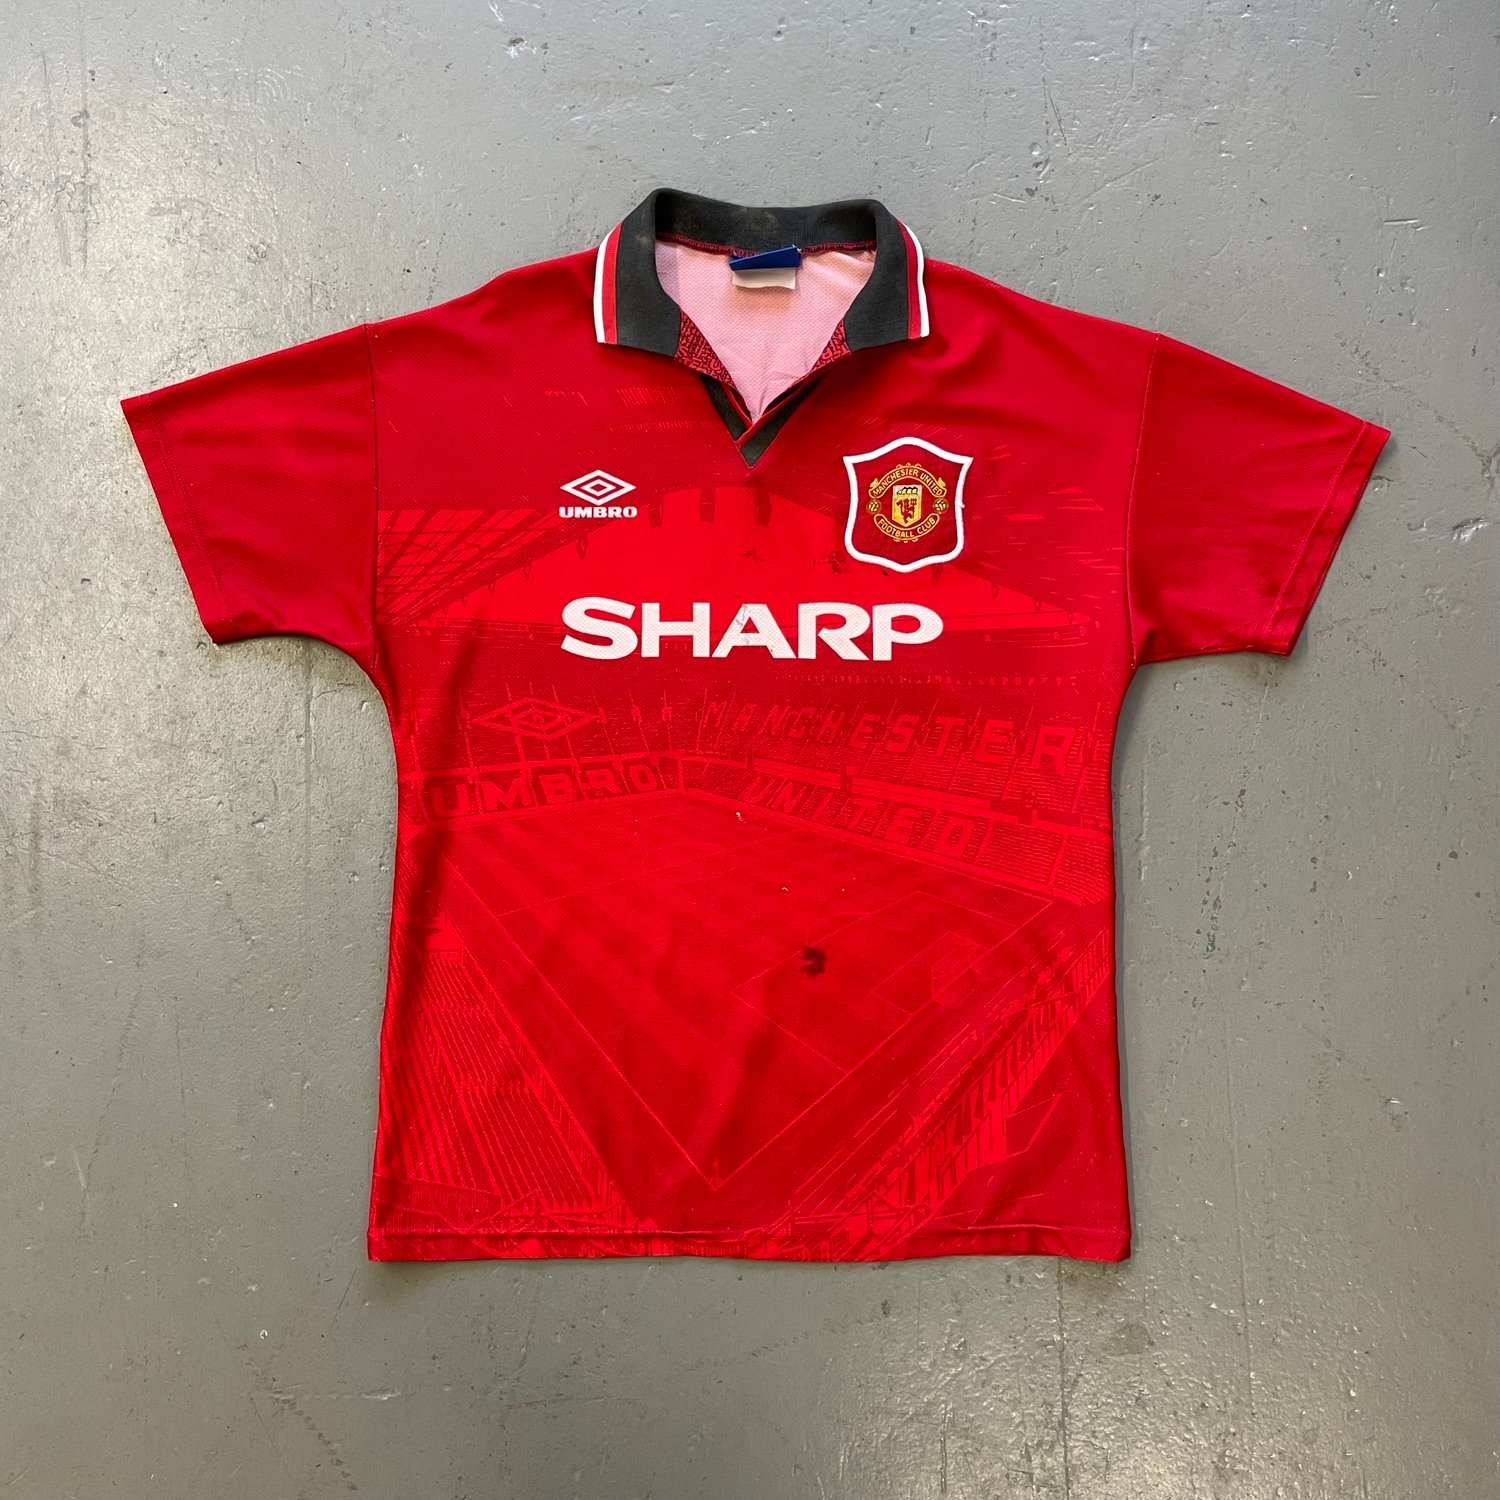 Image of 94/95 Manchester United home shirt sharpe 5 size medium 